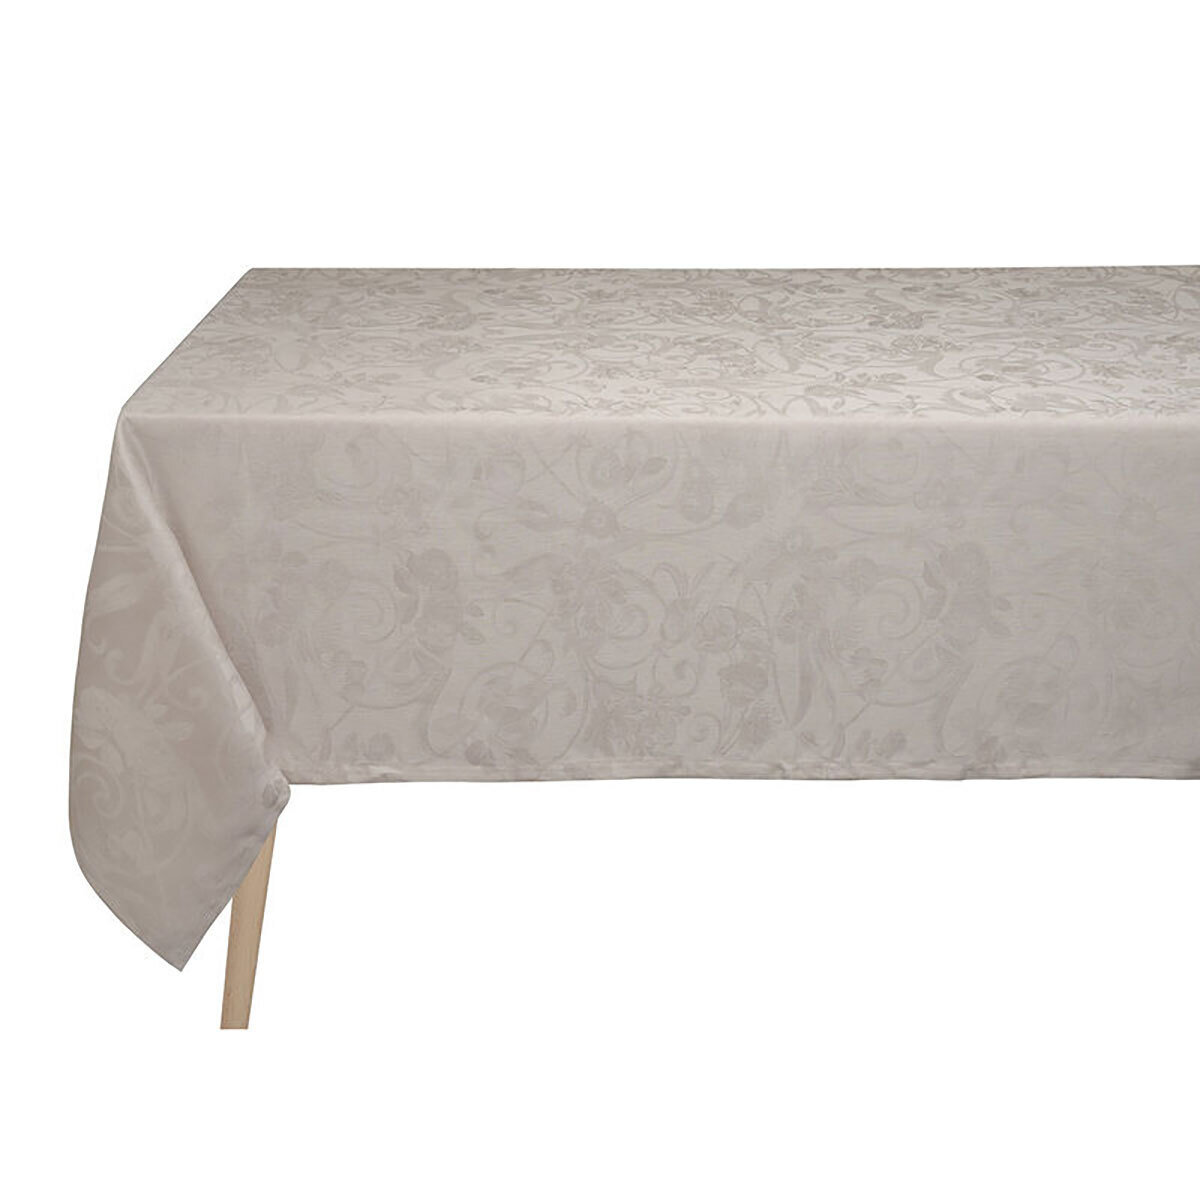 Le Jacquard Francais Tablecloth Tivoli Beige ¯240 100% Linen 94 Inch 28110